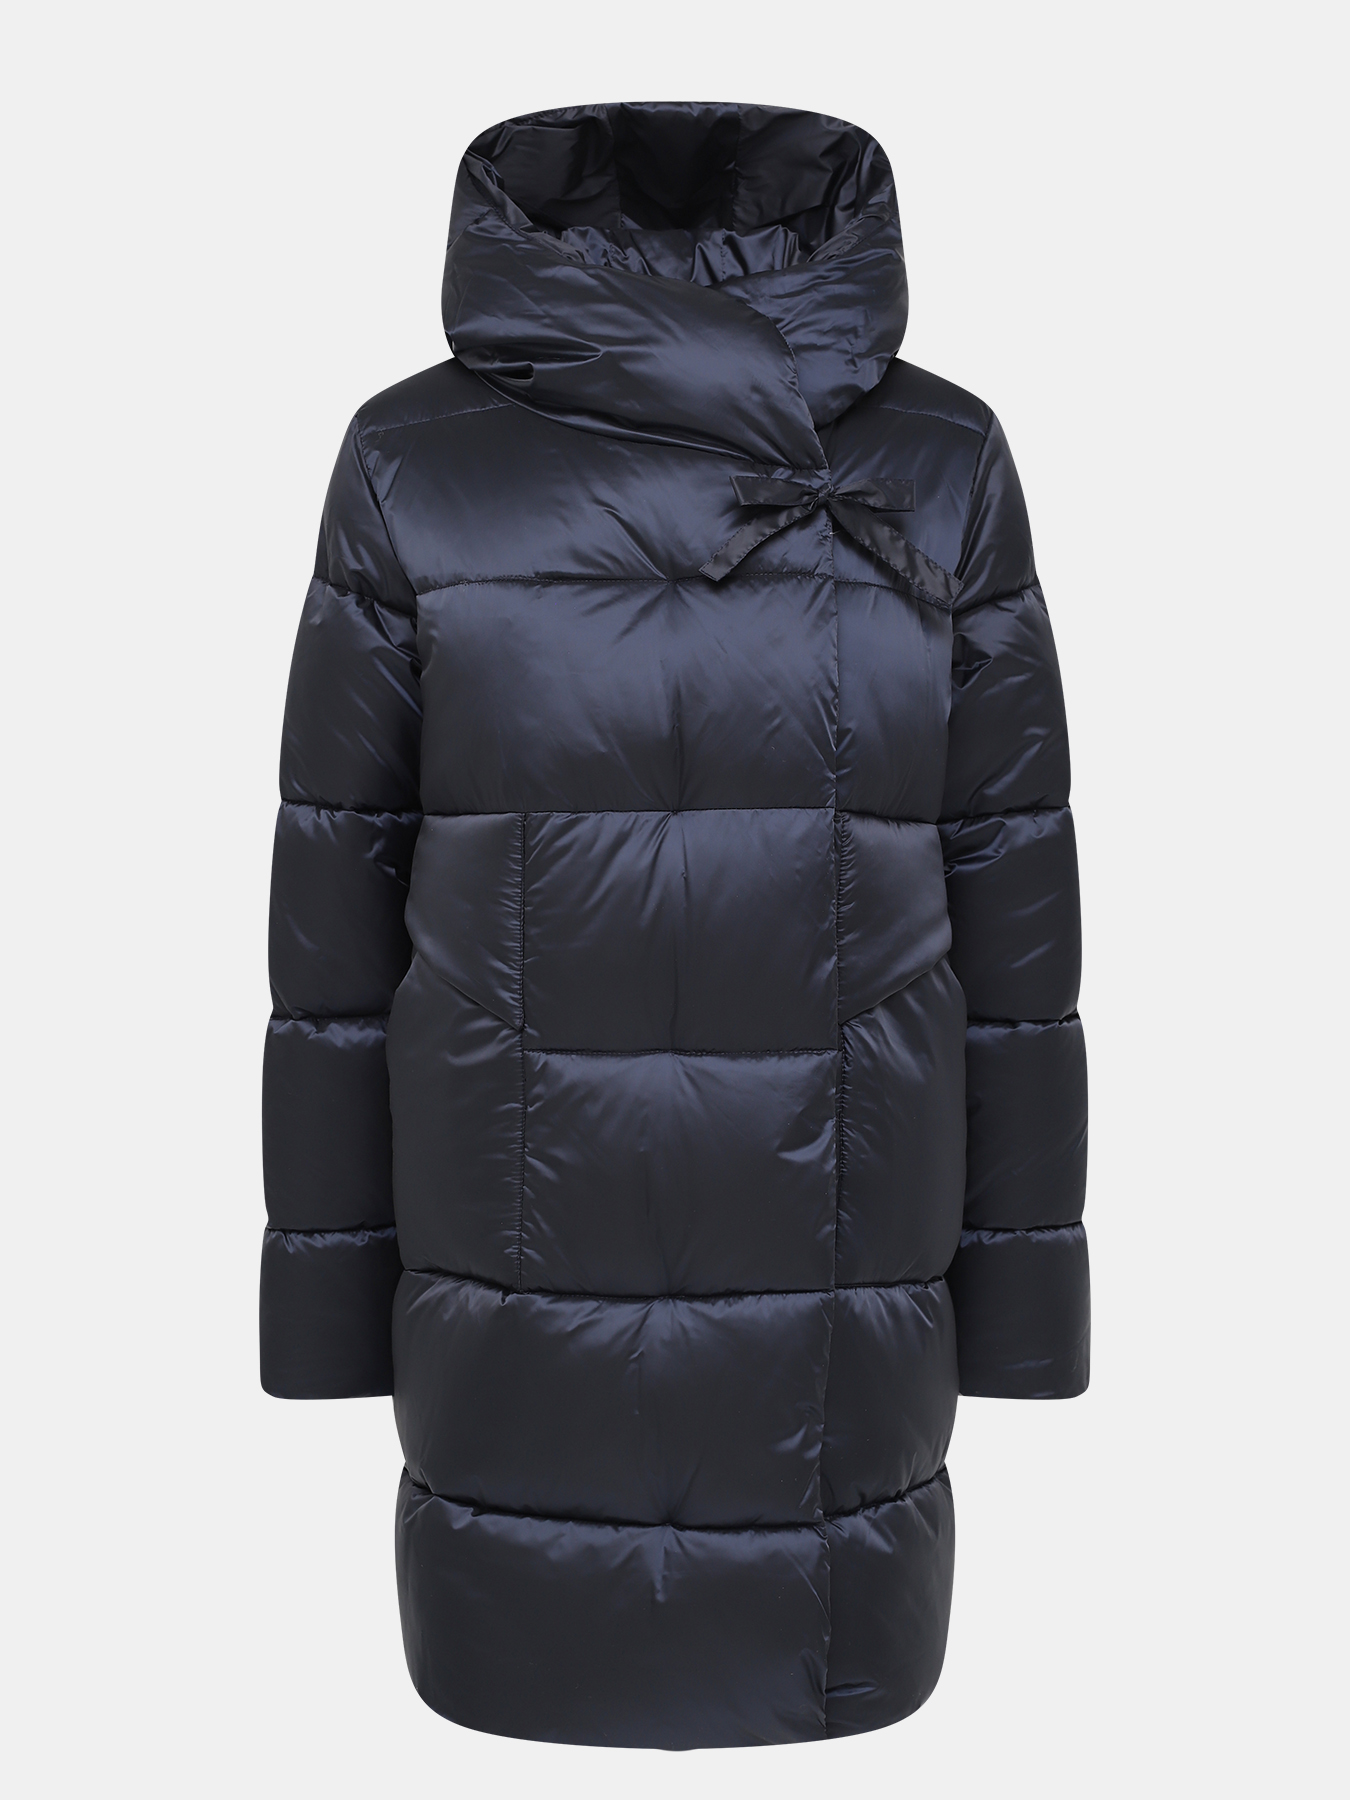 Пальто зимнее Maritta 433530-026, цвет темно-синий, размер 50